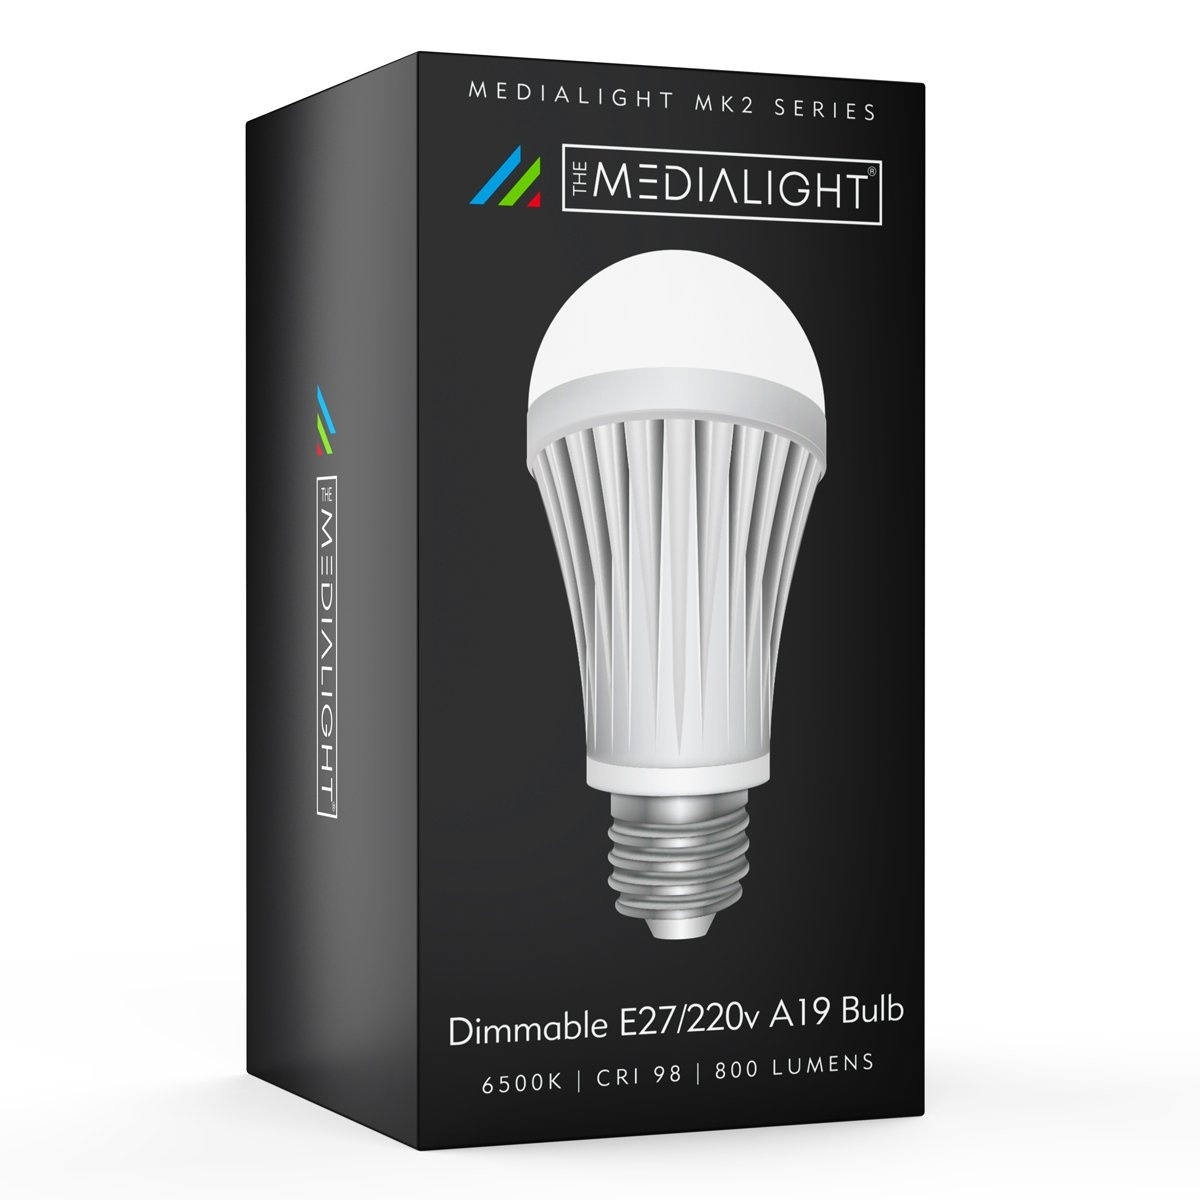 MediaLight Mk2 Dimmable A19 Light Bulb (E27)